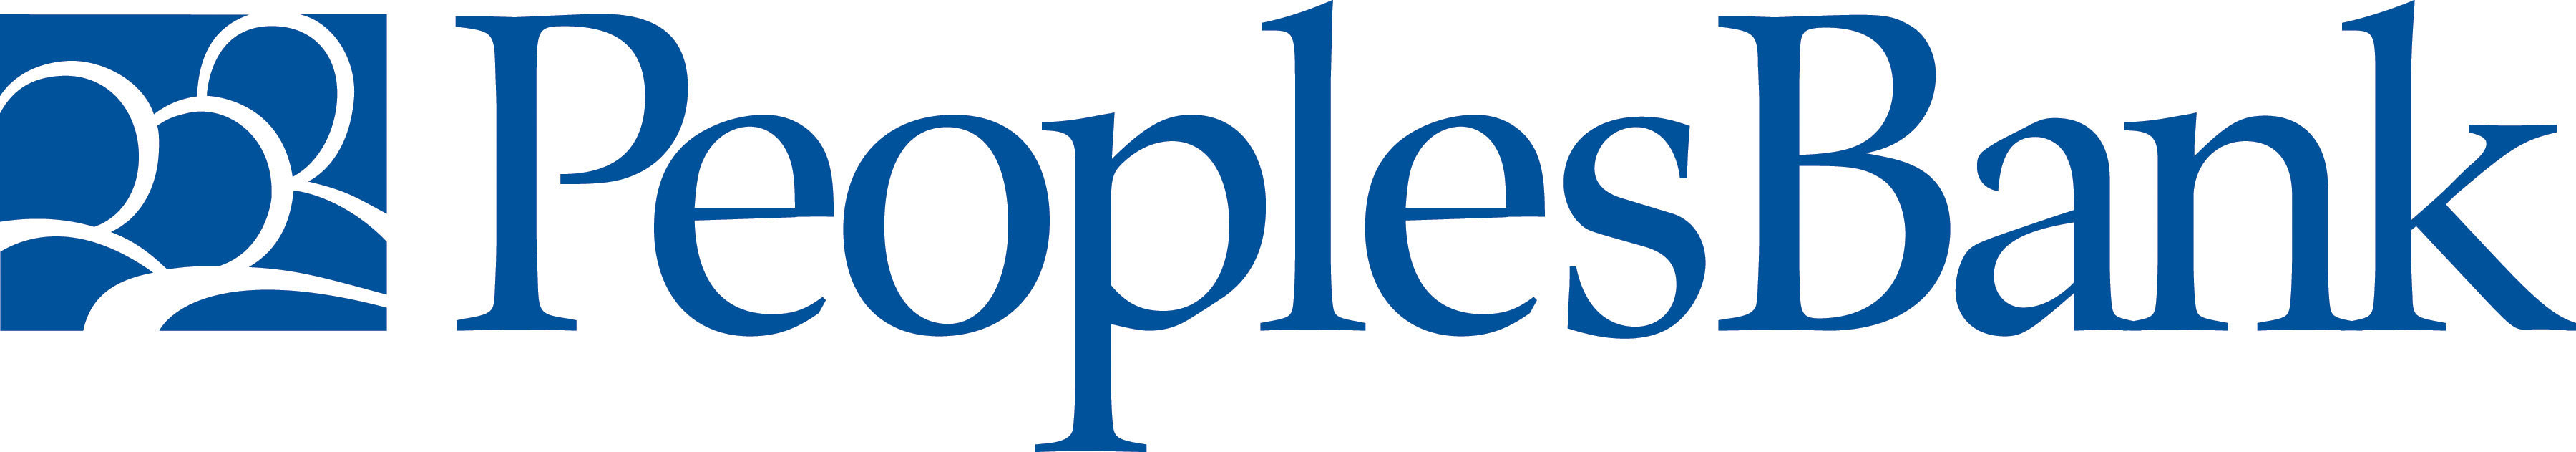 PeopleBank logo